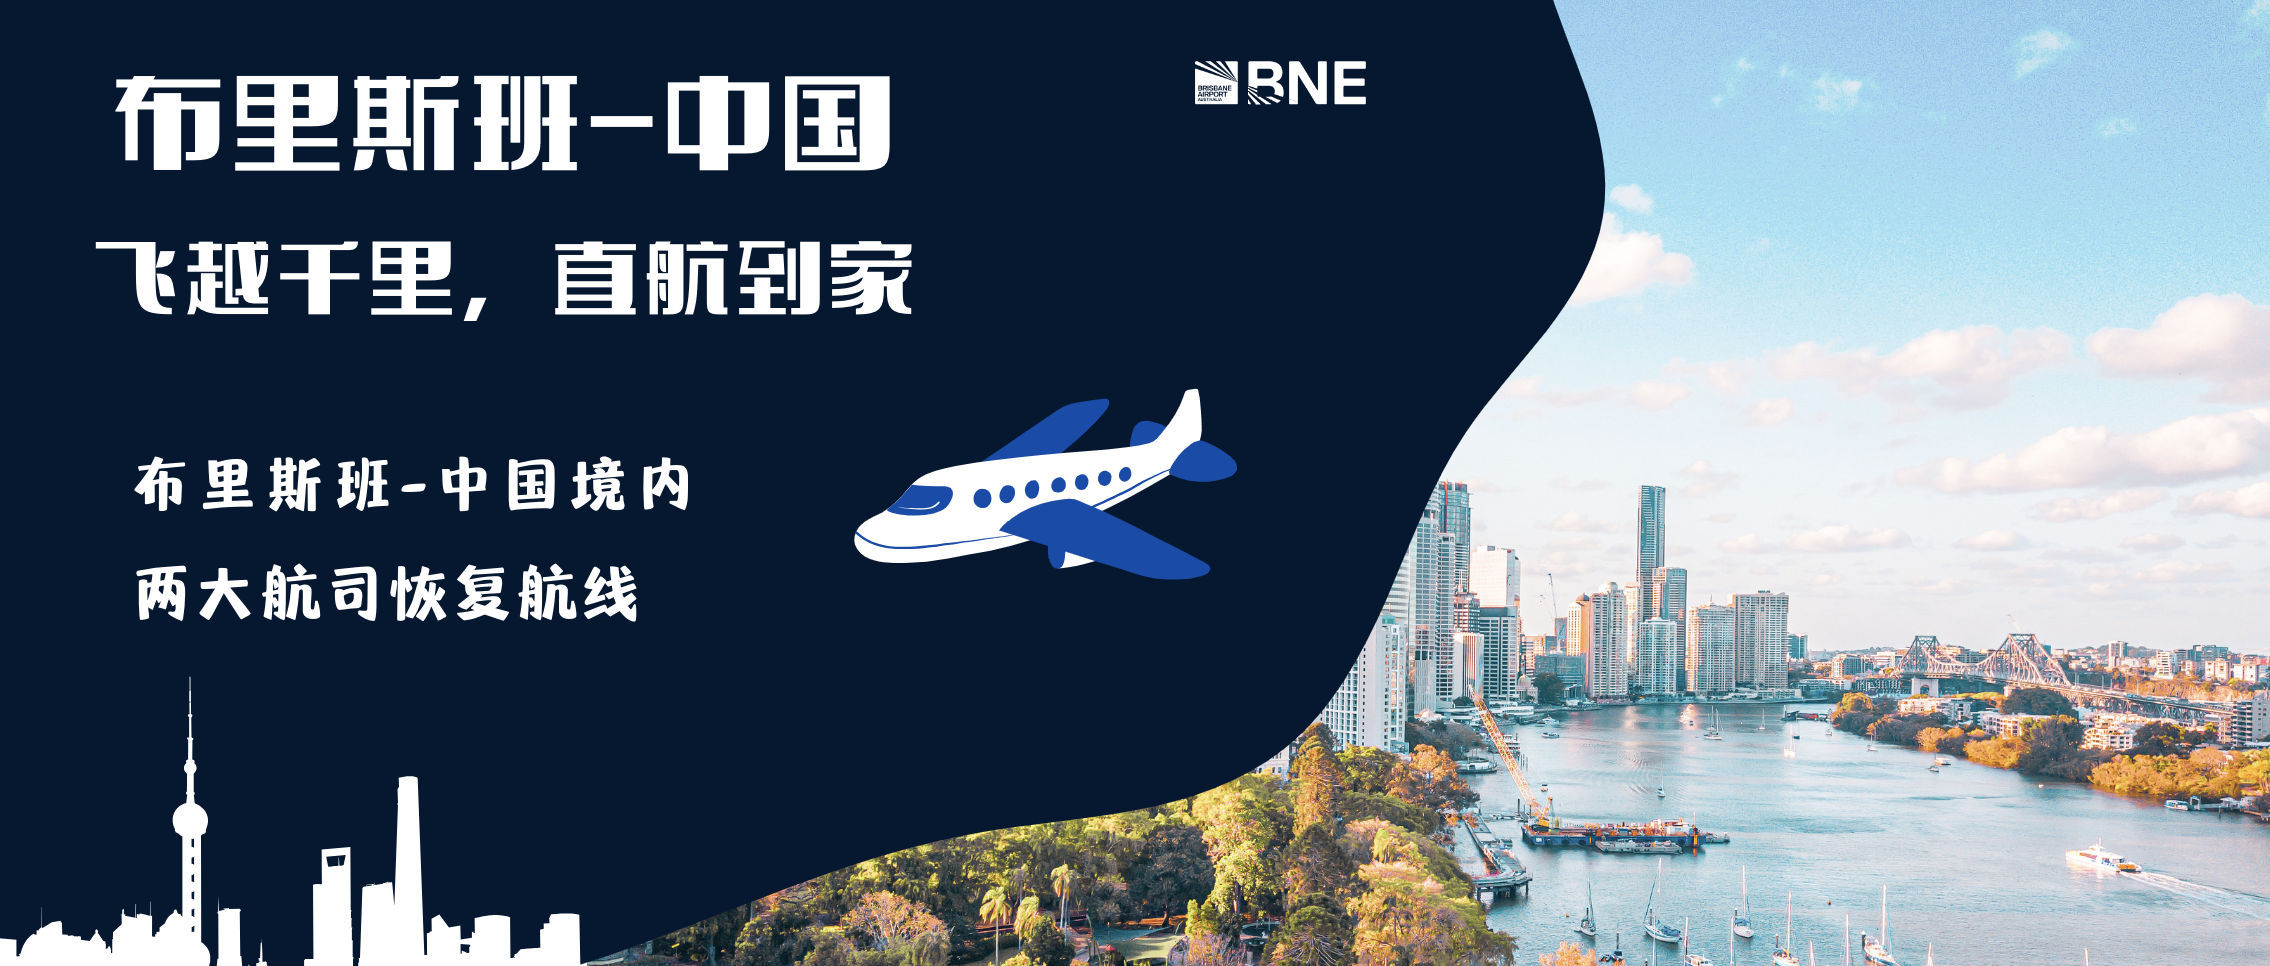 Brisbane direct flight to China